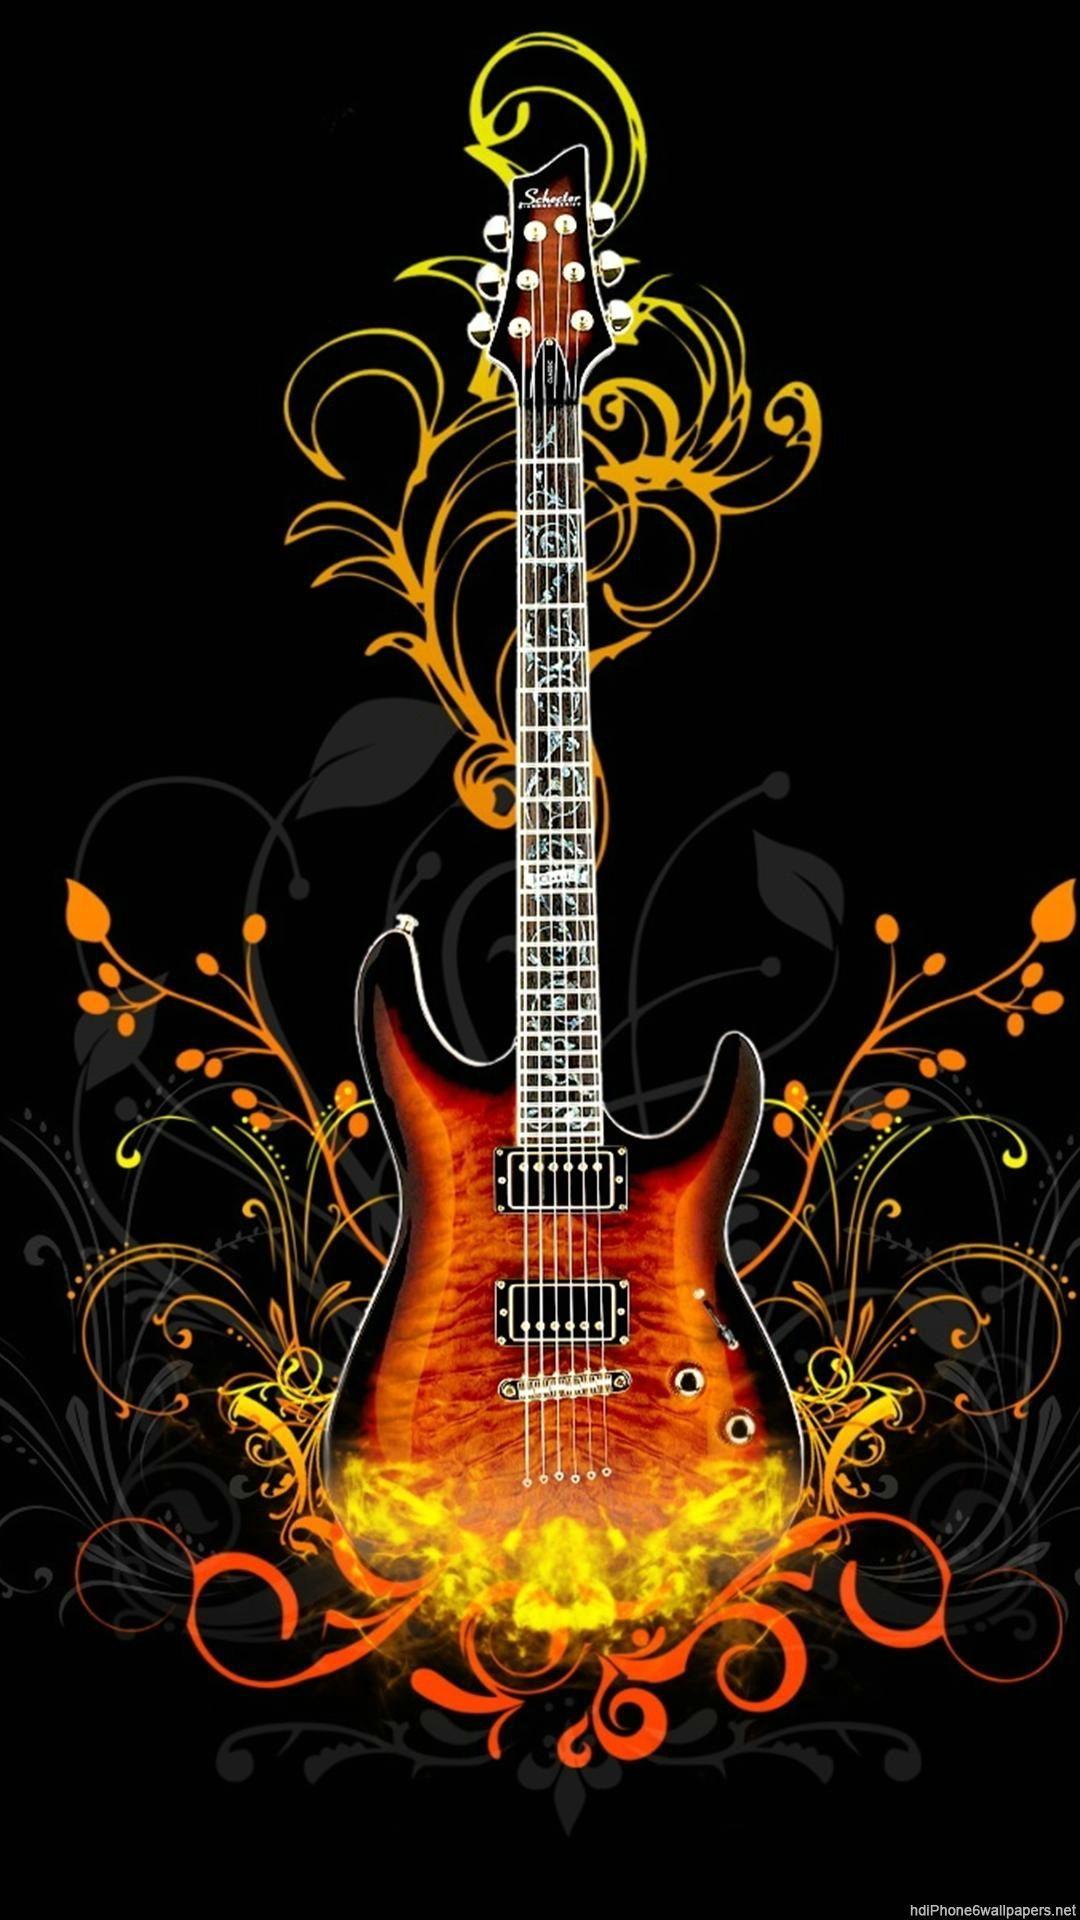 3D Guitar Wallpaper iPhone iPhone Wallpaper